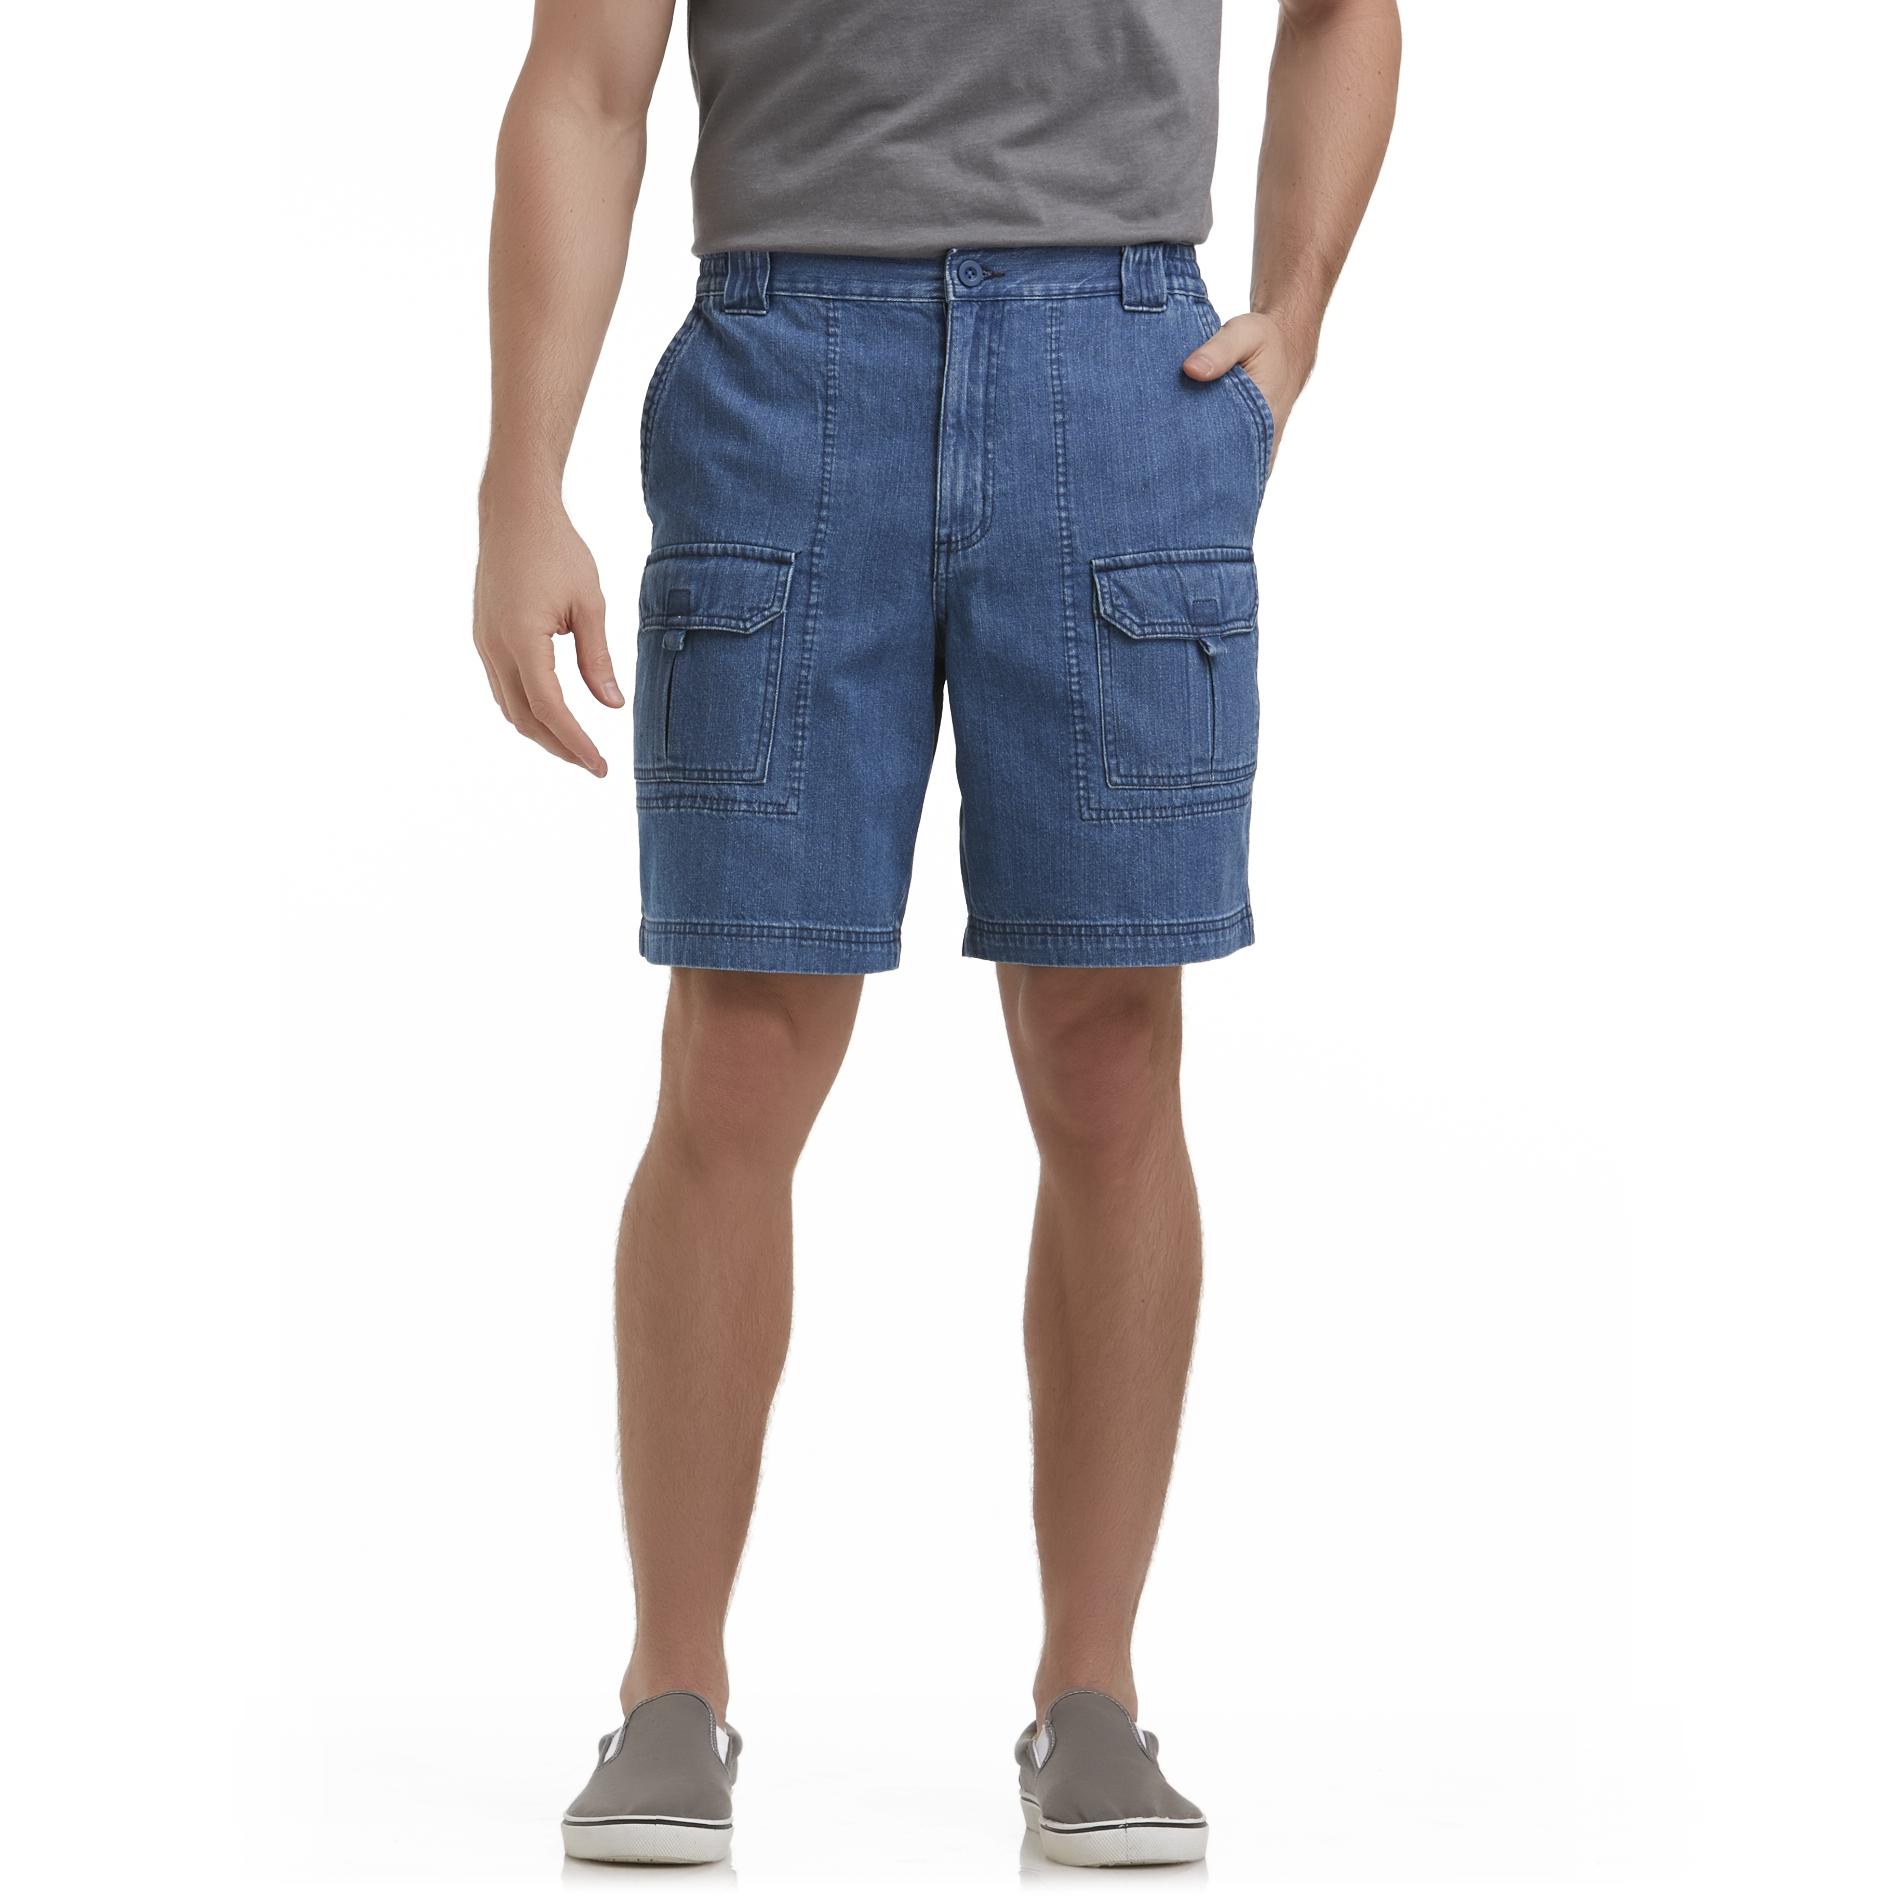 Basic Editions Men's Denim Shorts